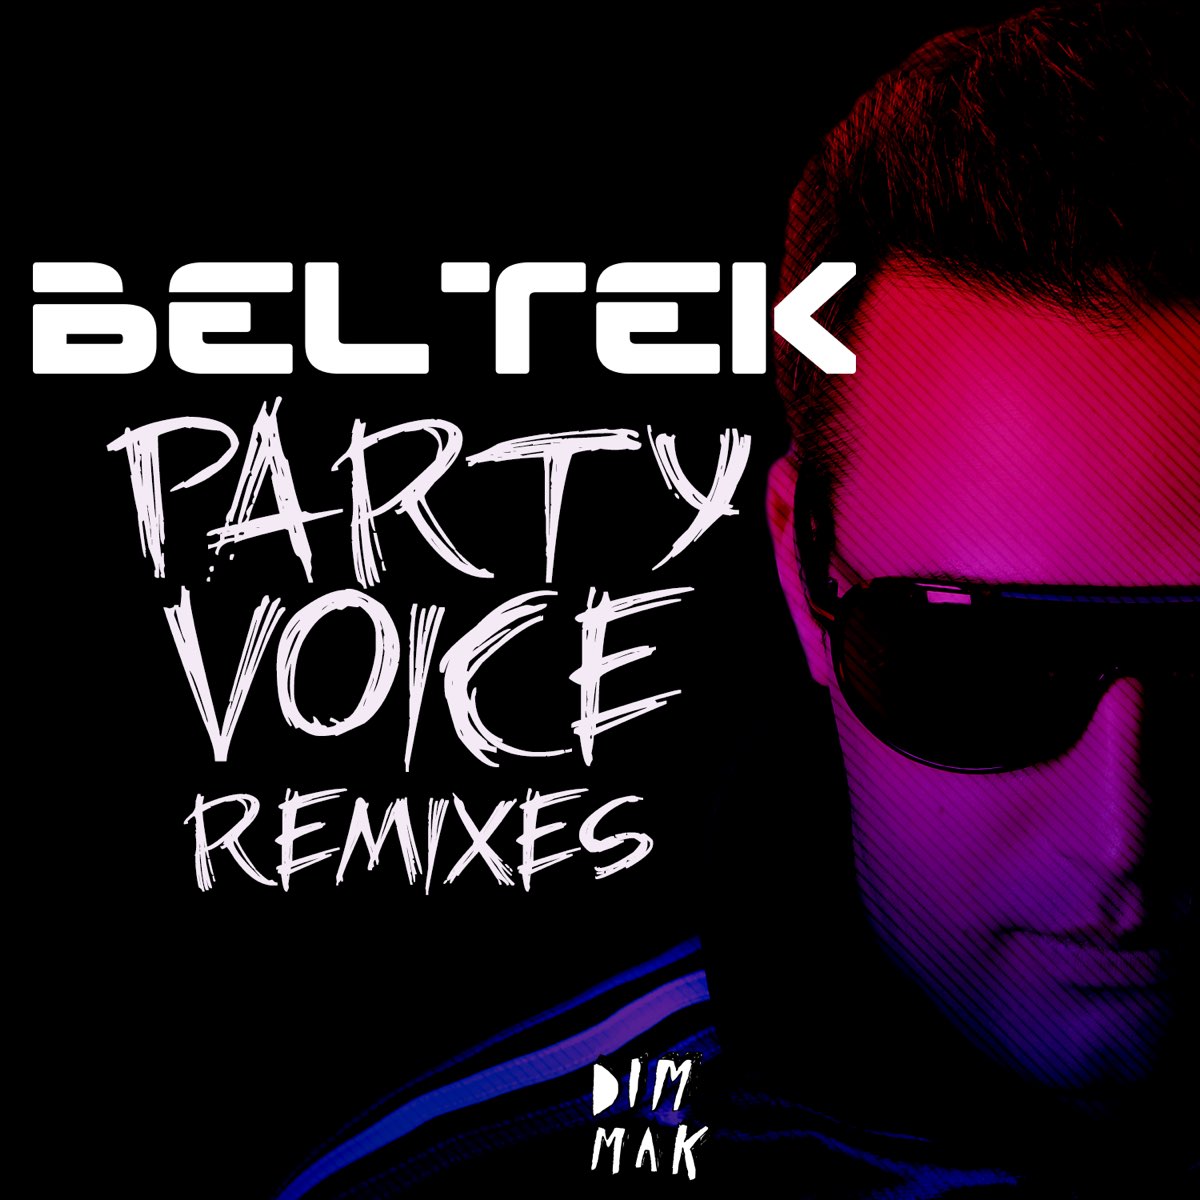 Umek & Beltek — is it. Beltek m. Voice remix